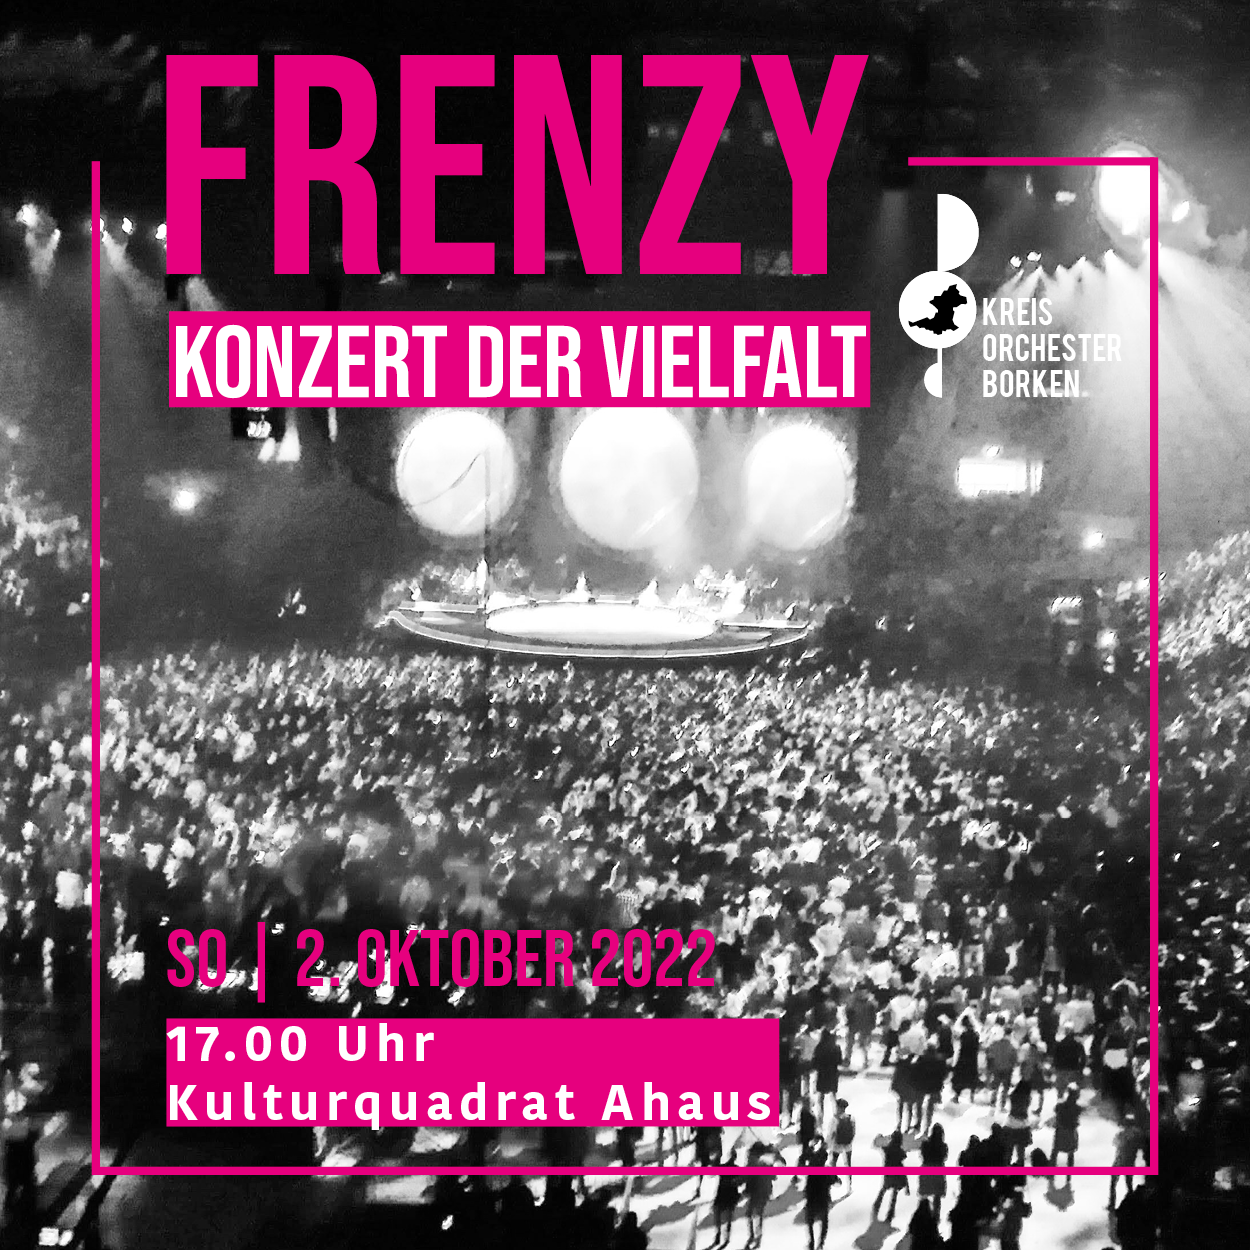 Kreisorchester Borken KOB Frenzy Beitrag Konzert 2022